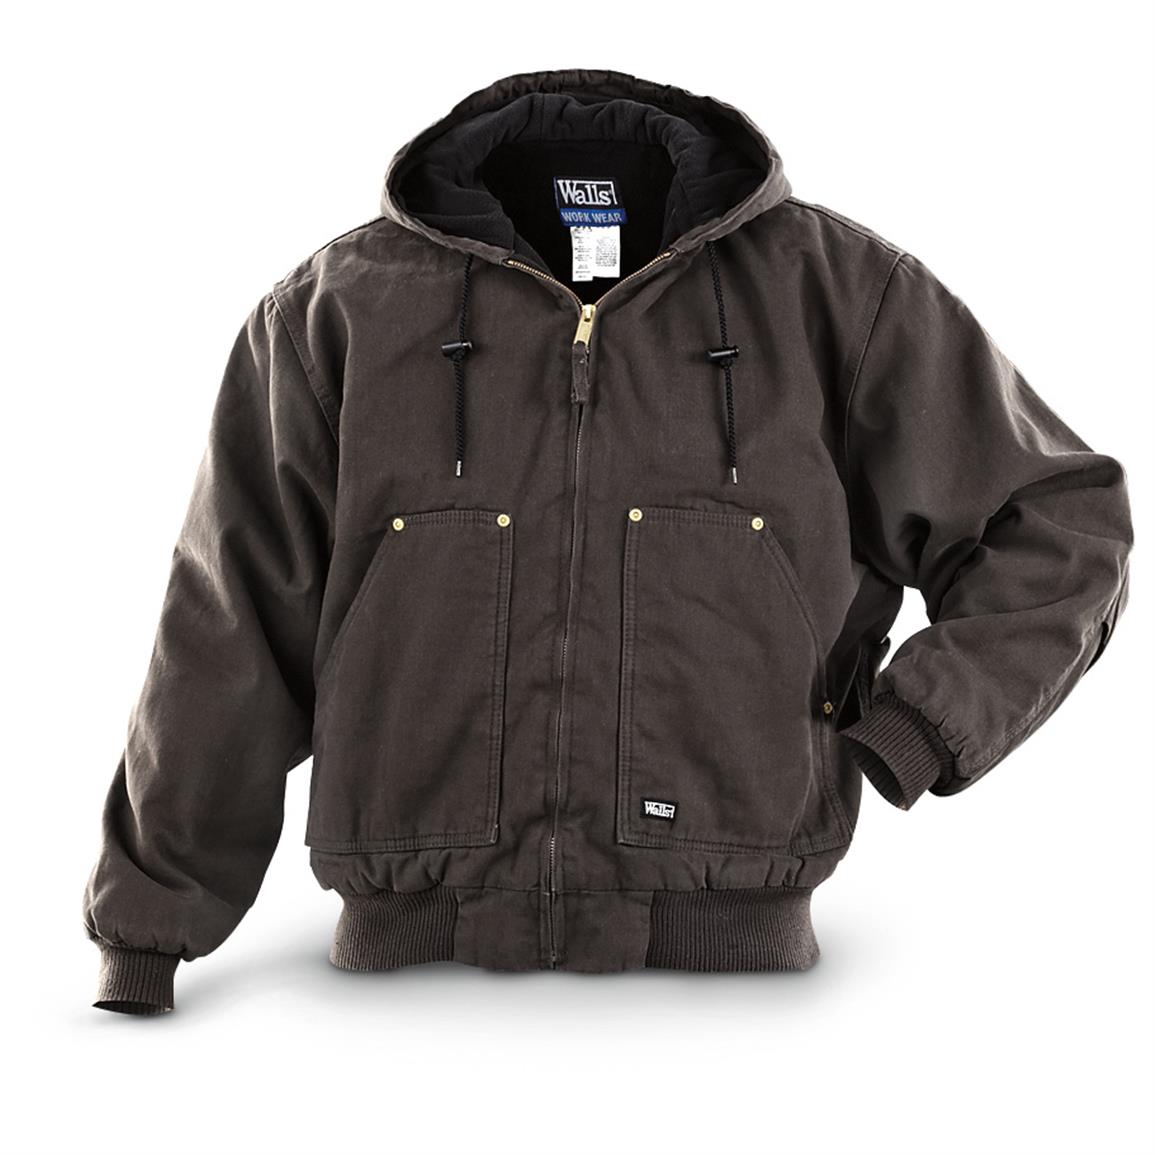 Walls Duck Hooded Jacket - 627525, Insulated Jackets & Coats at ...